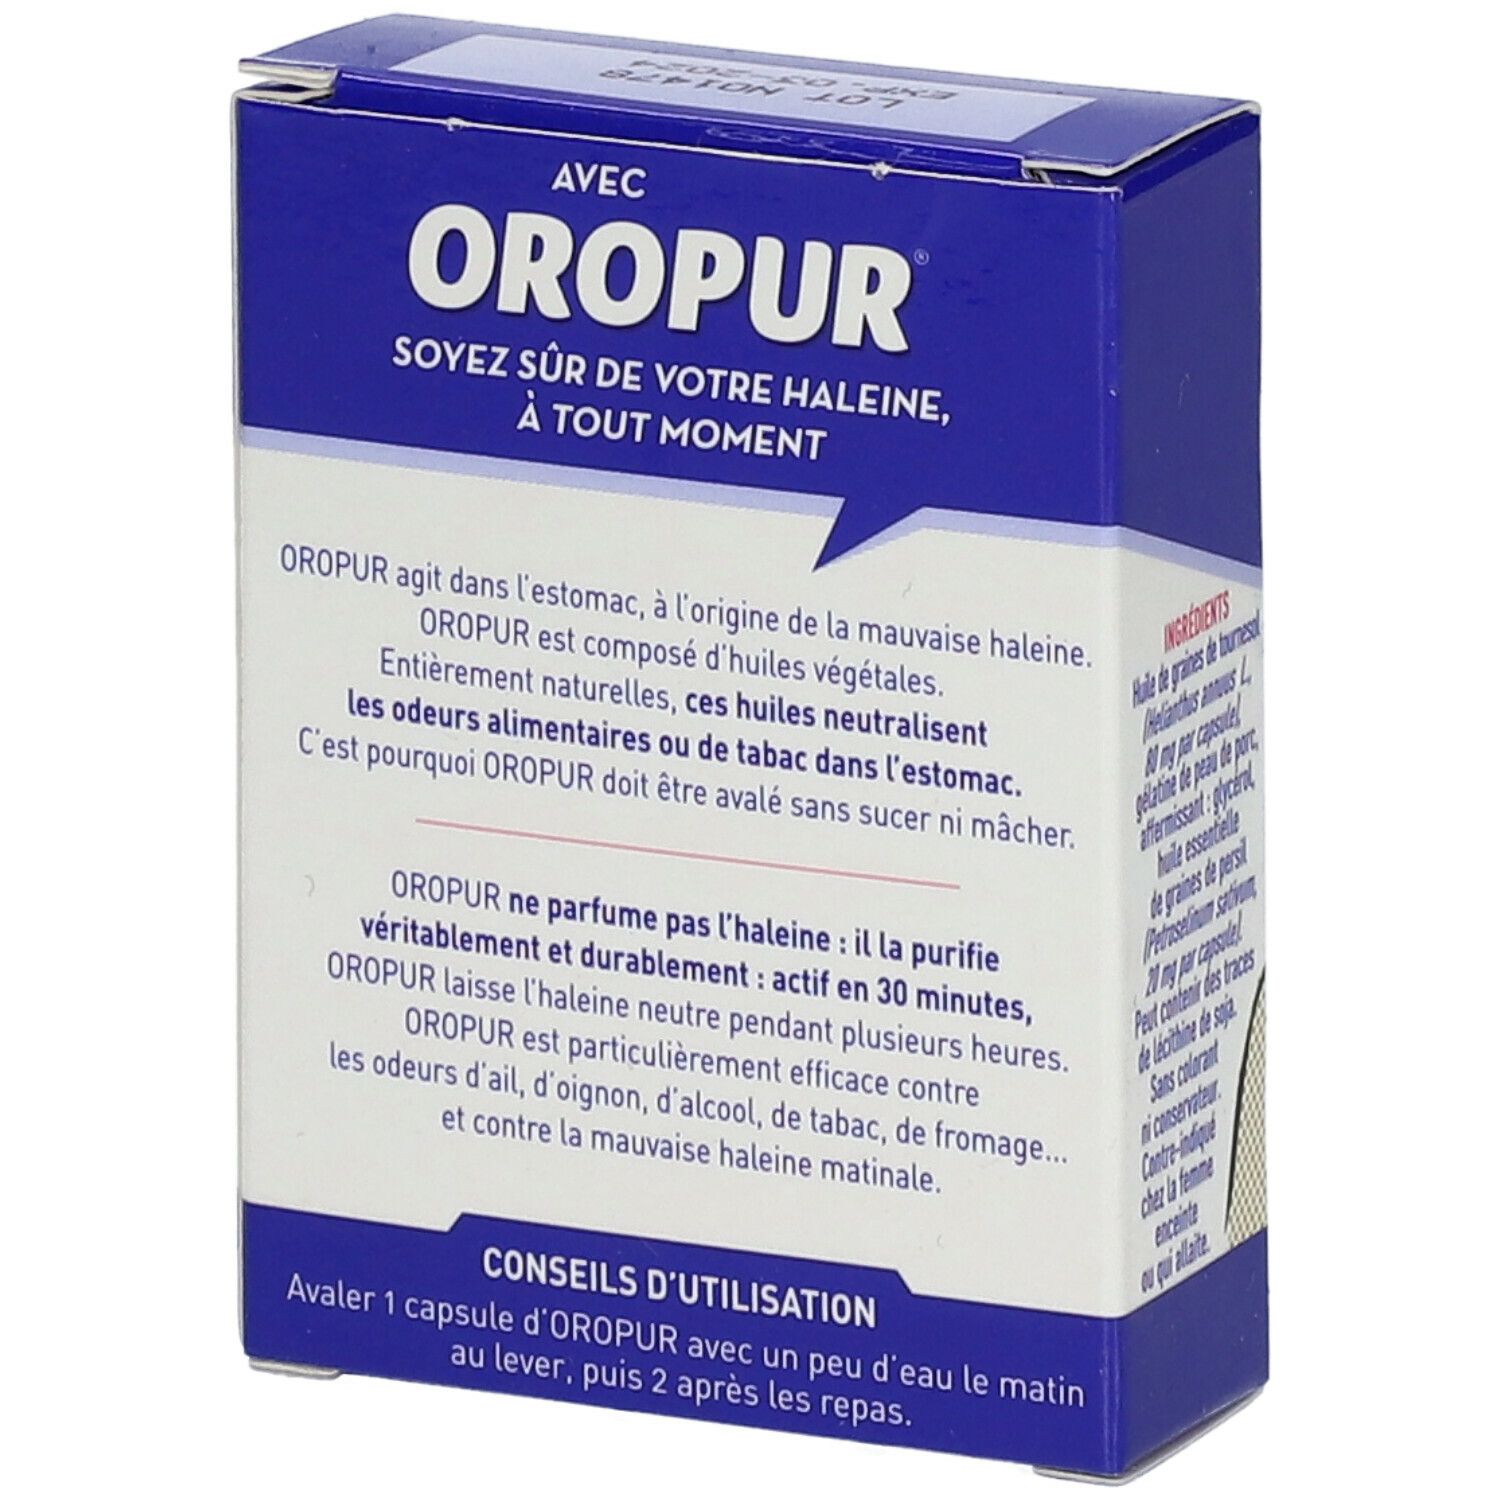 Acheter OROPUR - Une haleine sûre 50 capsules